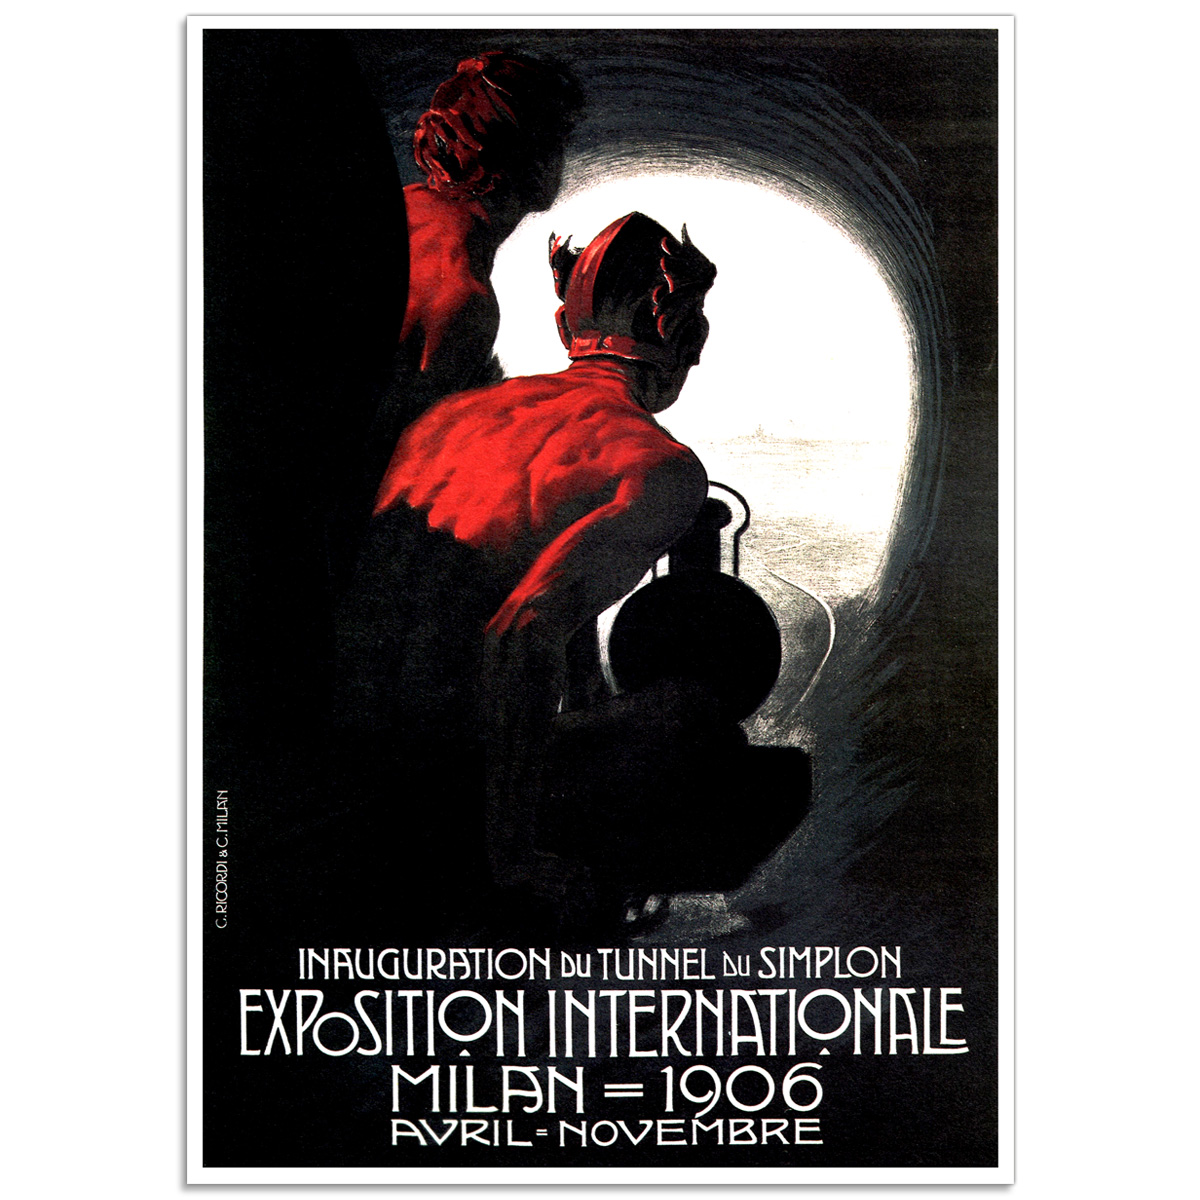 Vintage Italian Promotional Poster - Exposition Internationale,1906